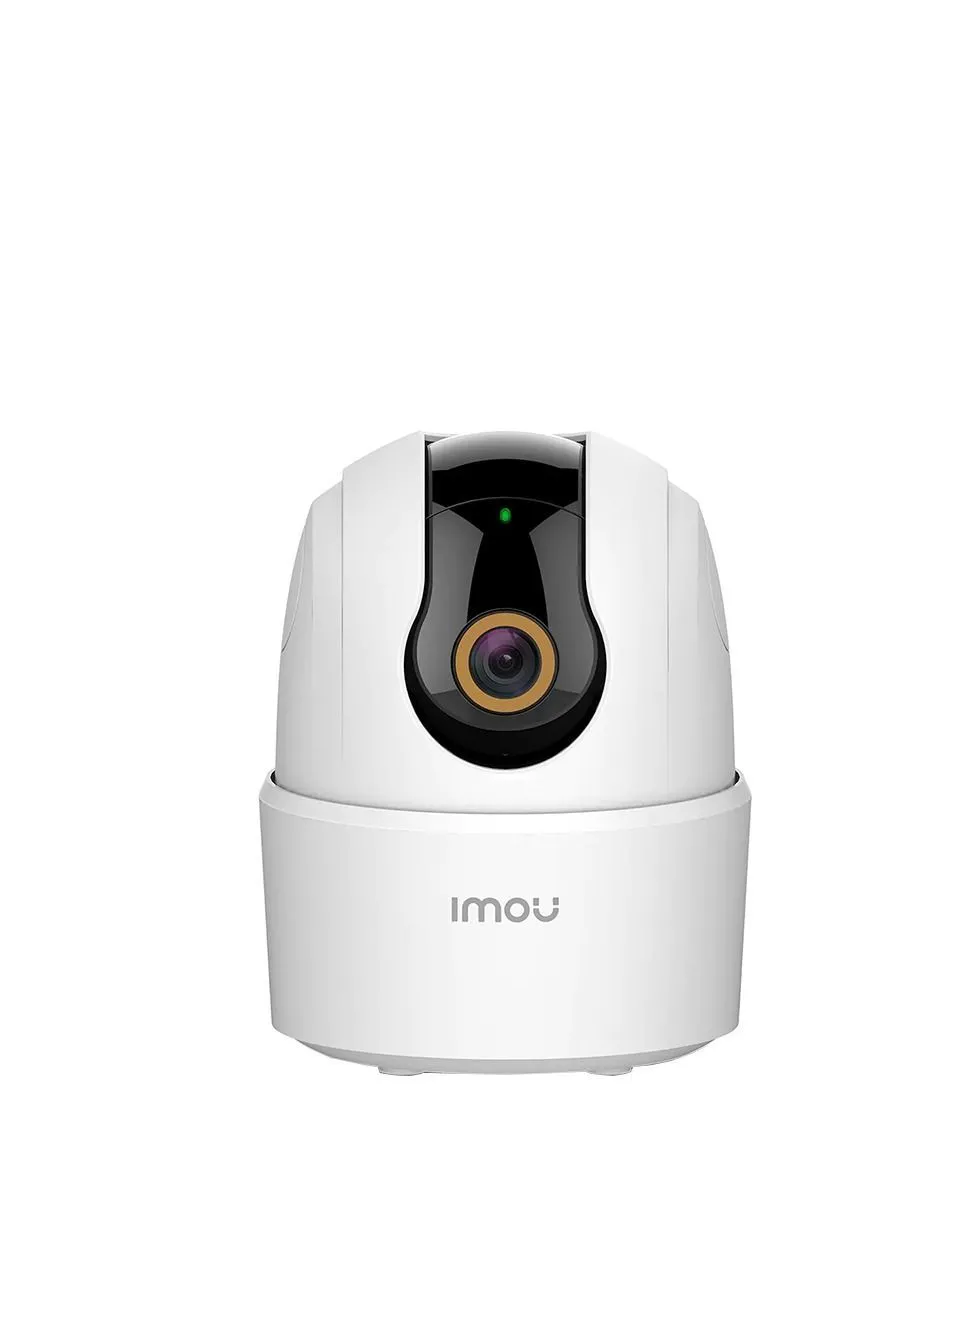 IMOU 4MP كاميرا أمان واي فاي داخل الباب / صوت ثنائي الاتجاه / كشف بشري / كشف الحركة / صفارة إنذار مدمجة / وضع الخصوصية / Ranger2C